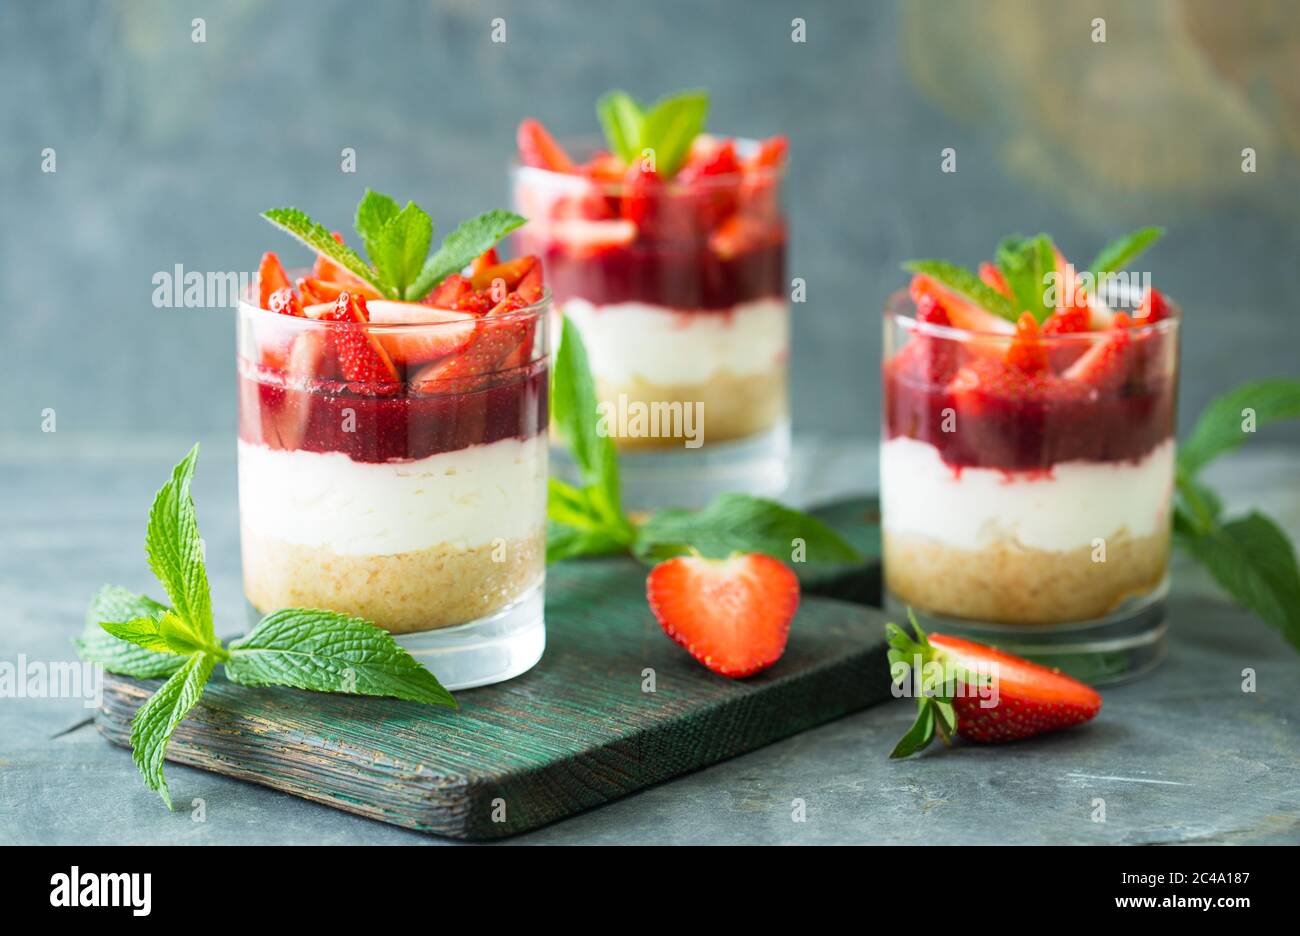 Dessert aux fraises - Cheesecake au verre Photo Stock - Alamy